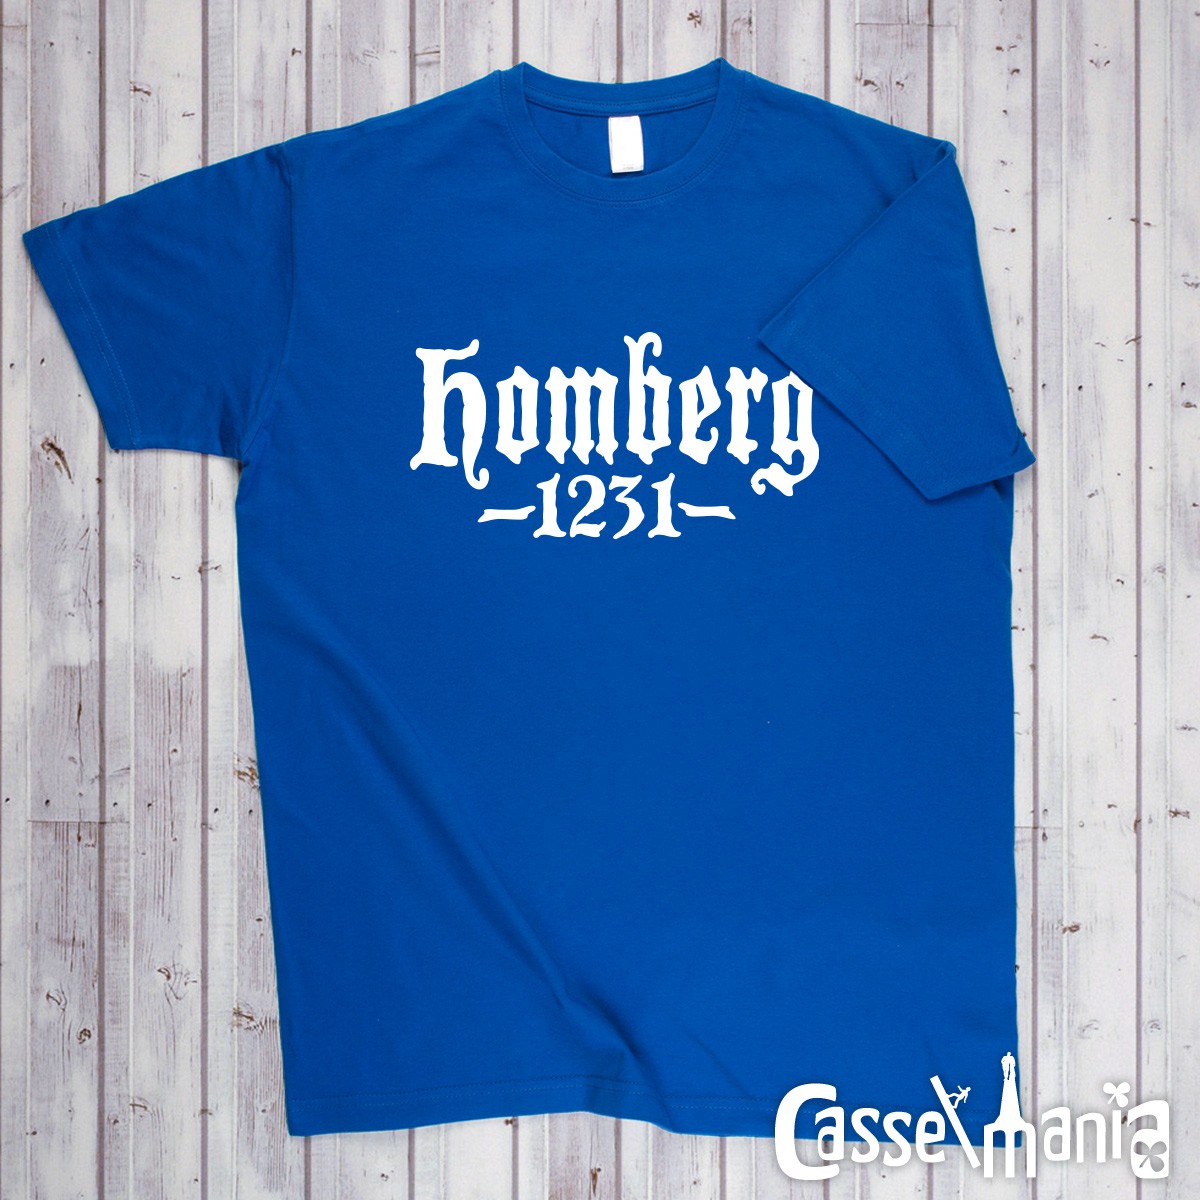 HOMBERG - 1231, UNISEX